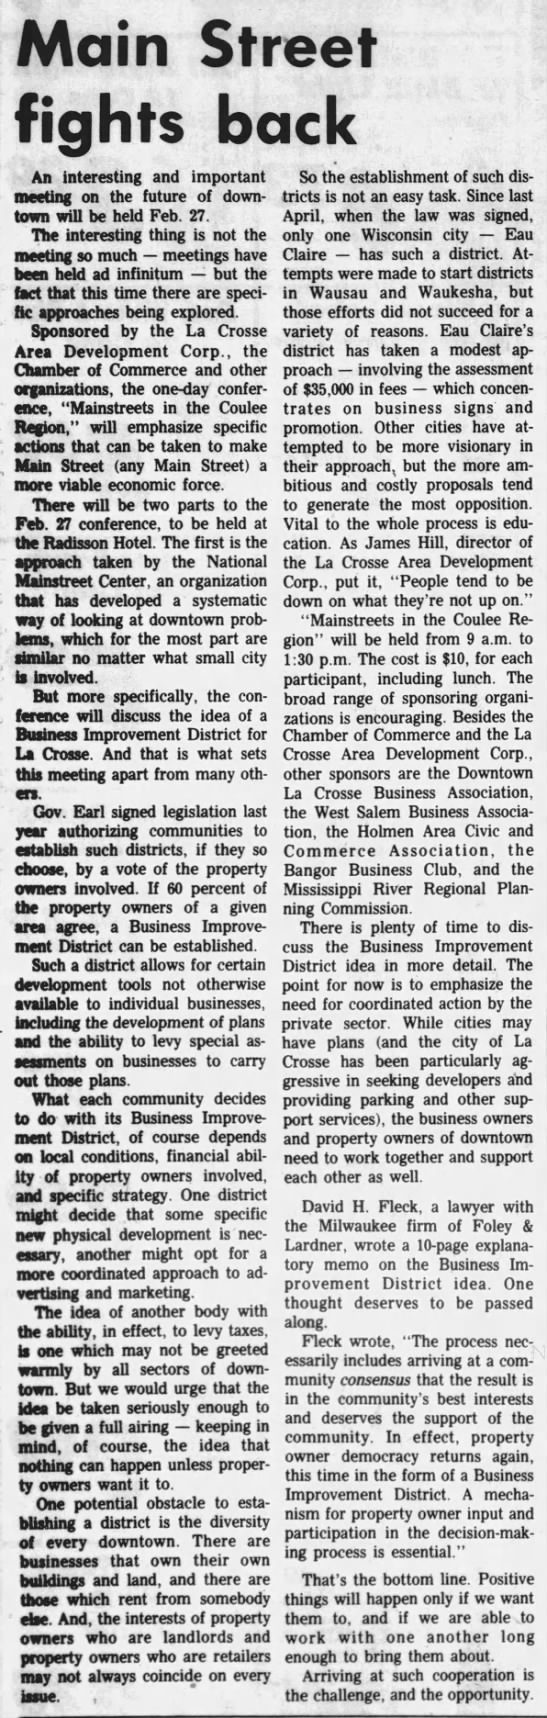 1985 Mainstreets program sponsored by West Salem Business Association - 